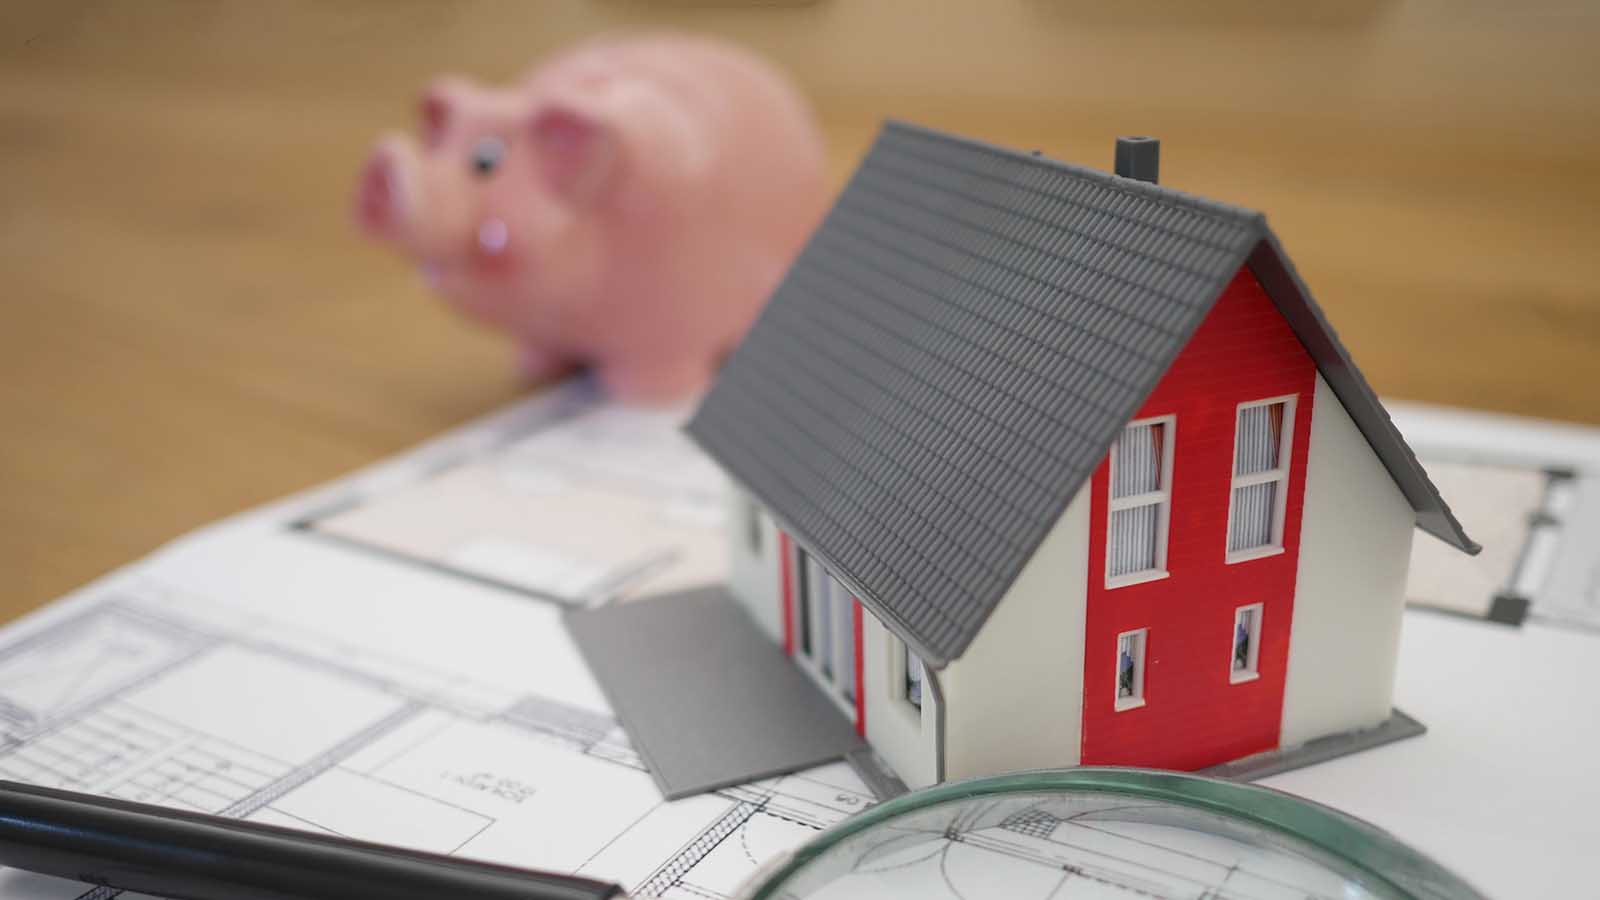 A piggy bank behind a model of a house.